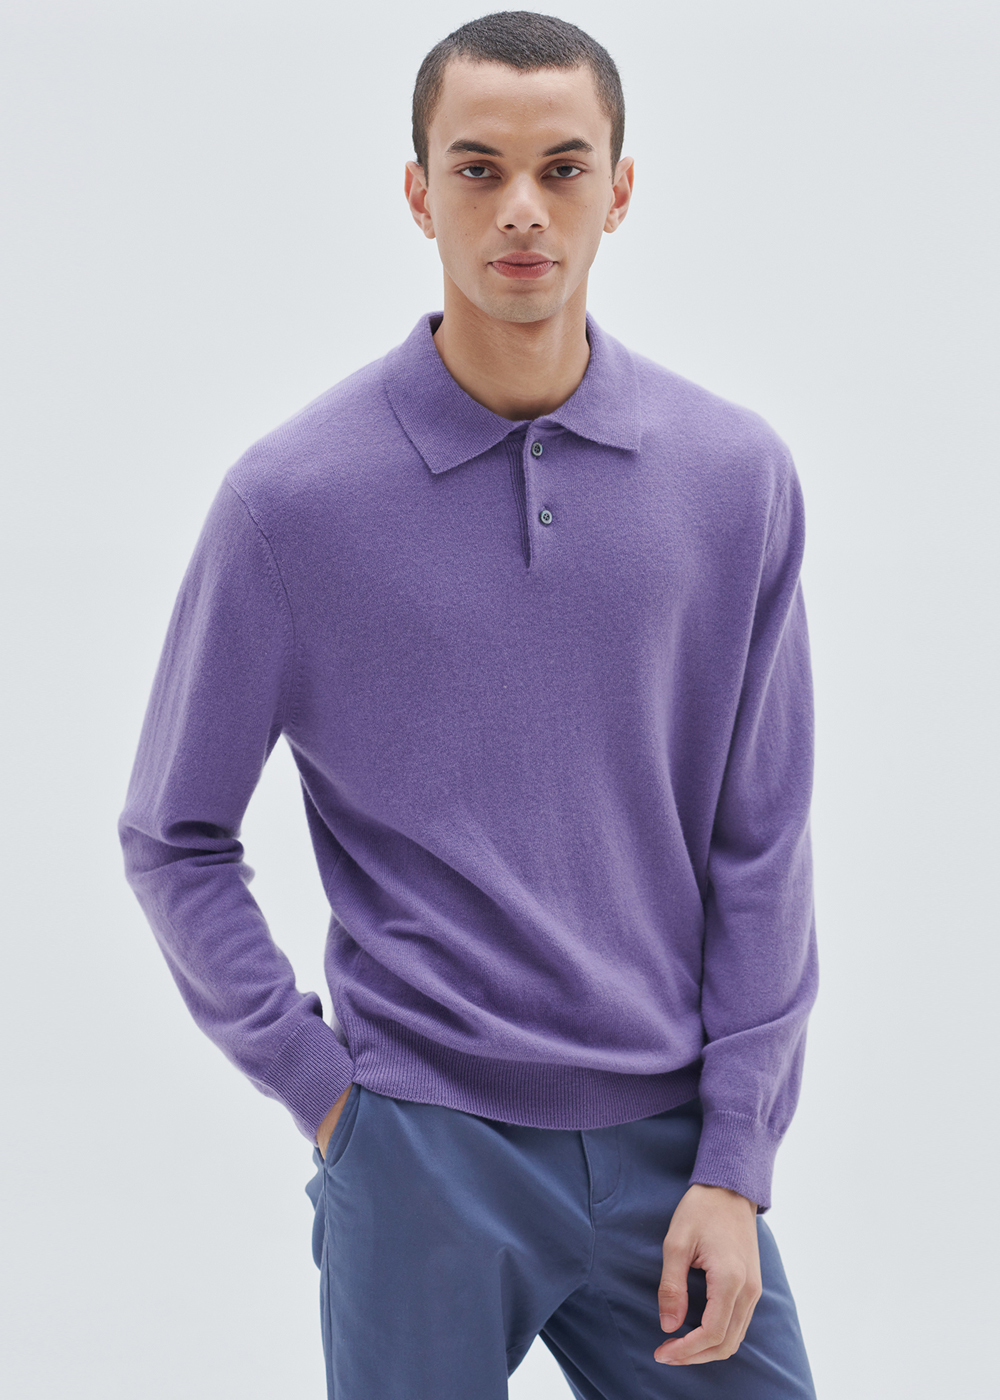 A logo collar shirt men pullover (violet) 20%